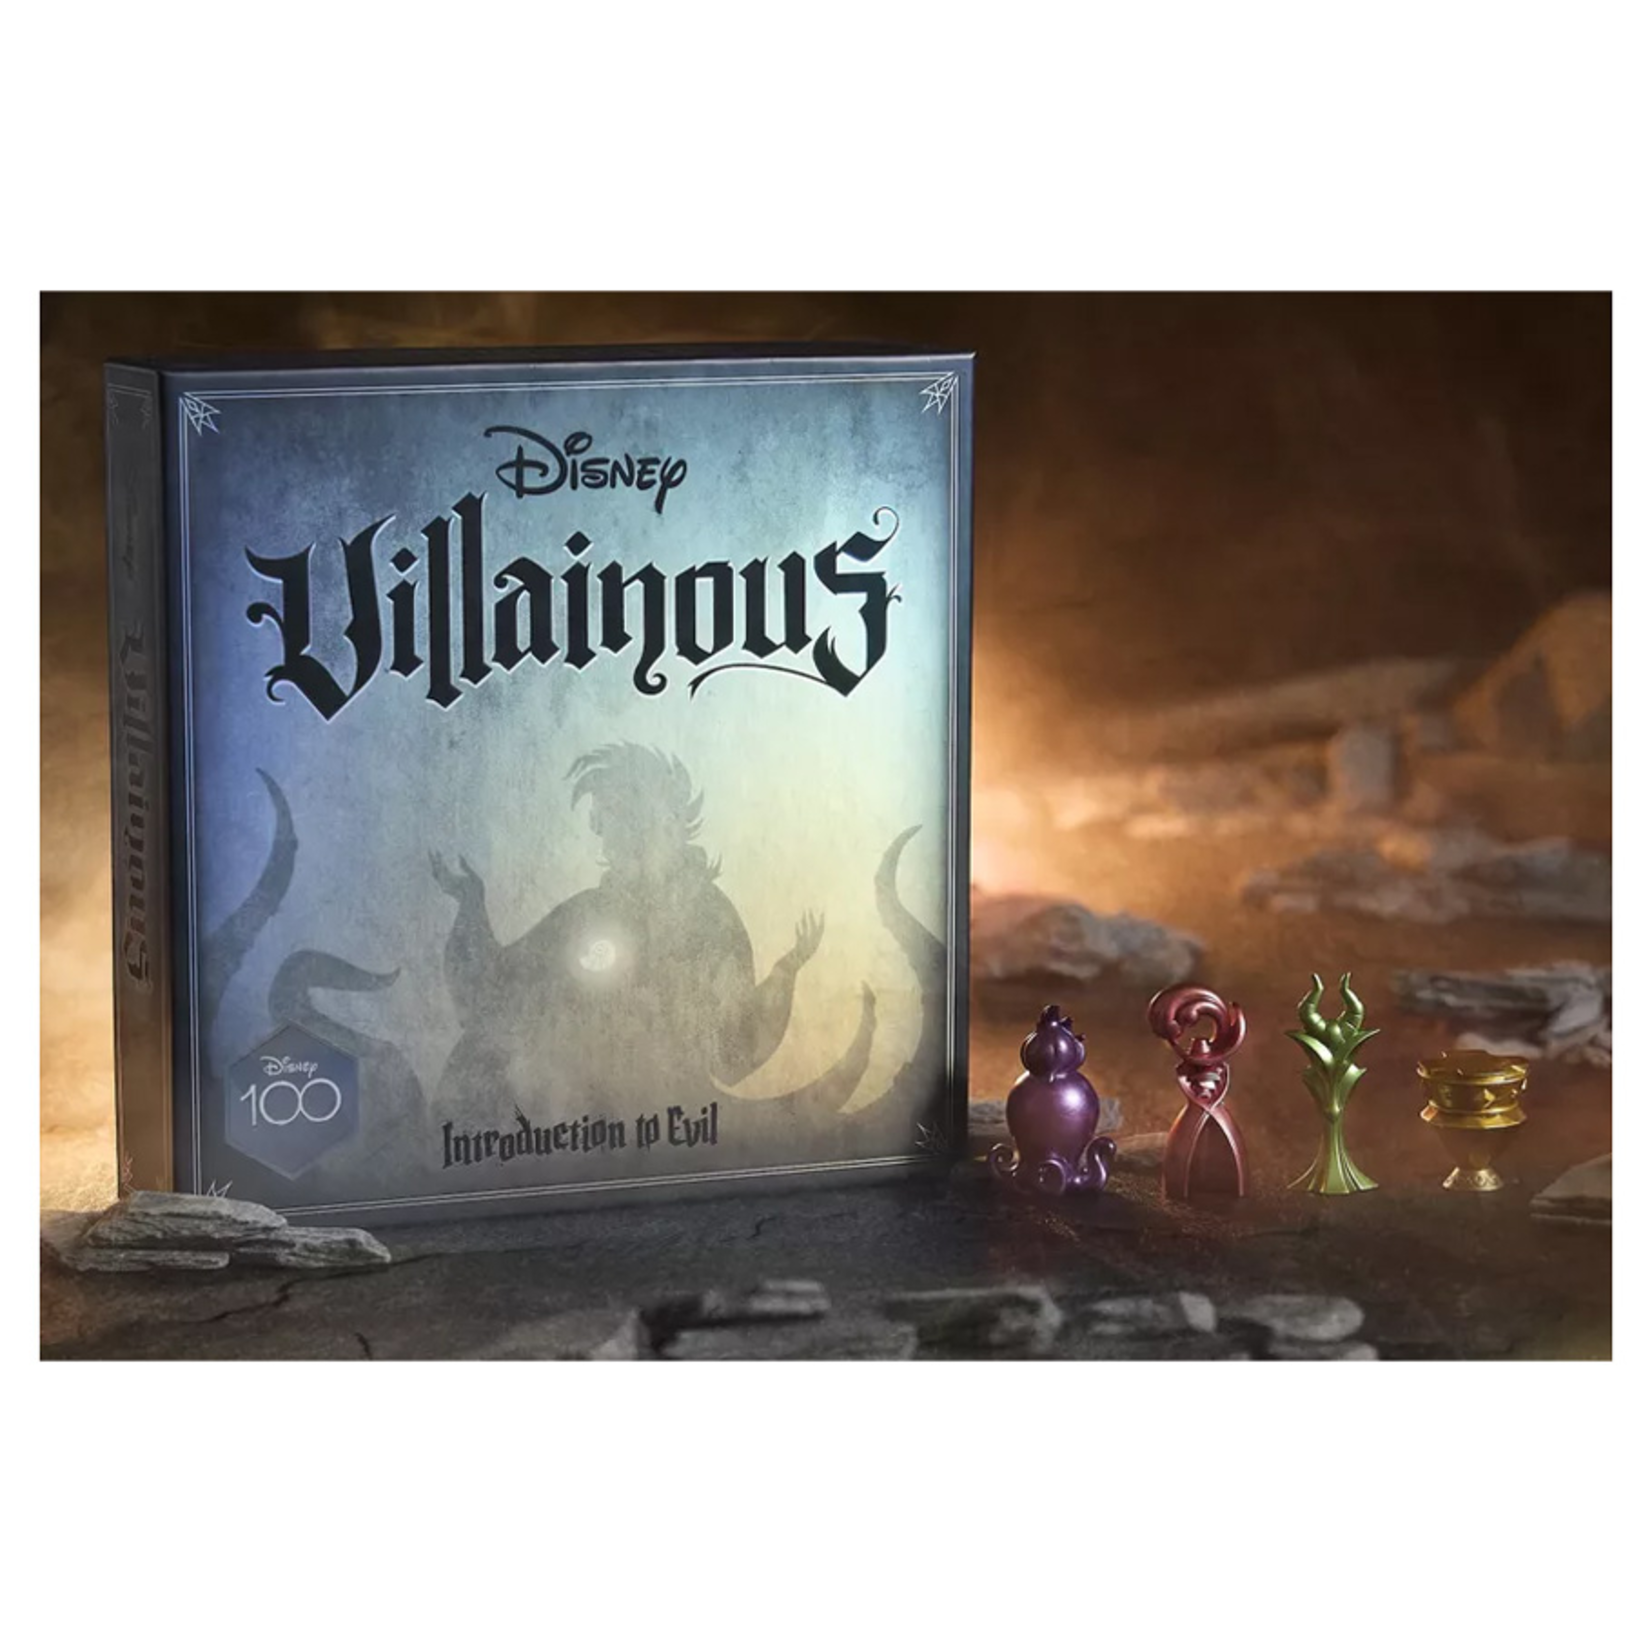 Villainous Disney Intro to Evil Disney 100th Anniversary